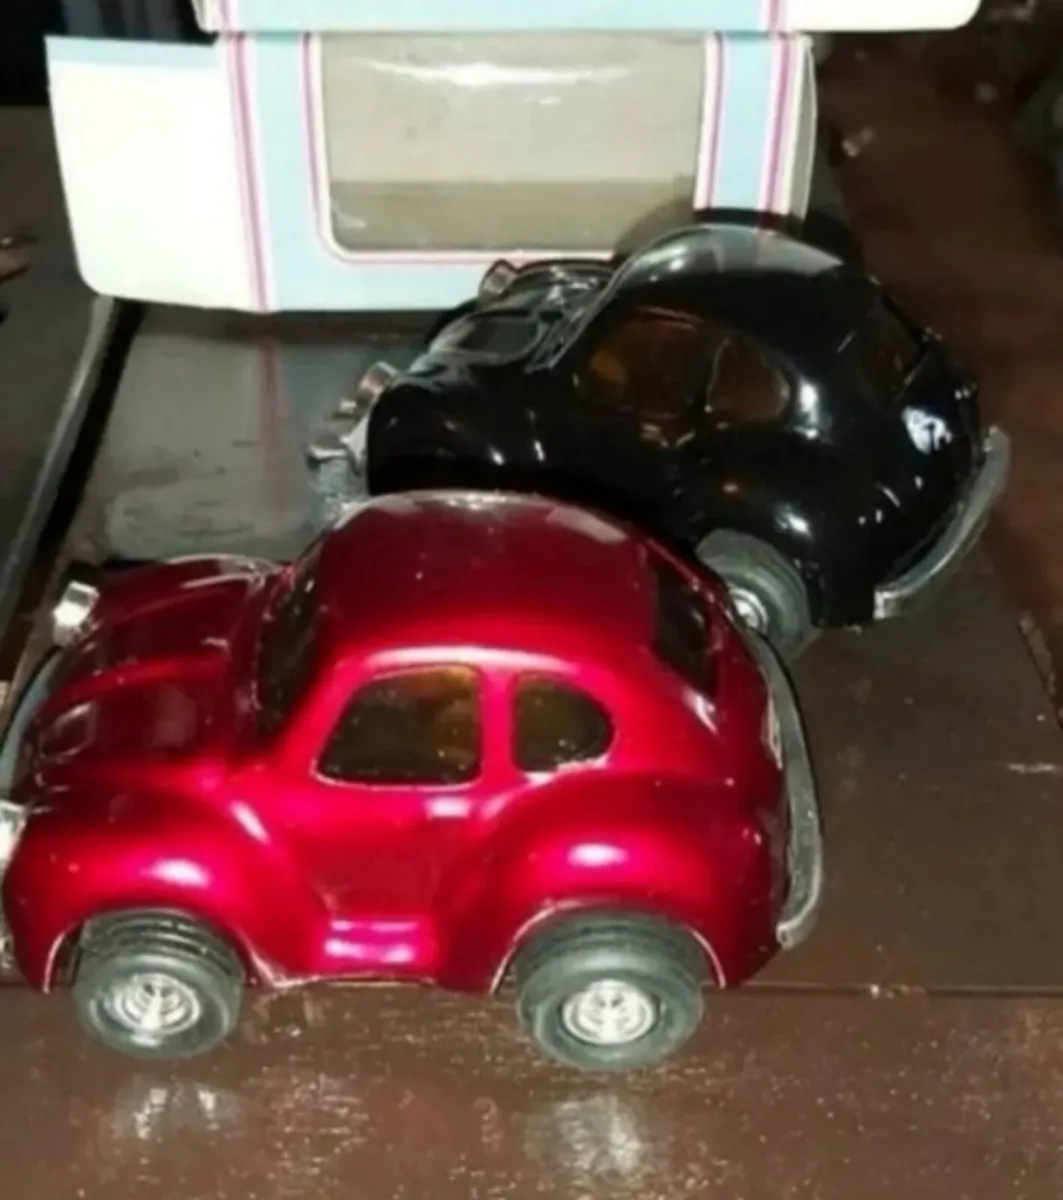 2 VW beetle model car